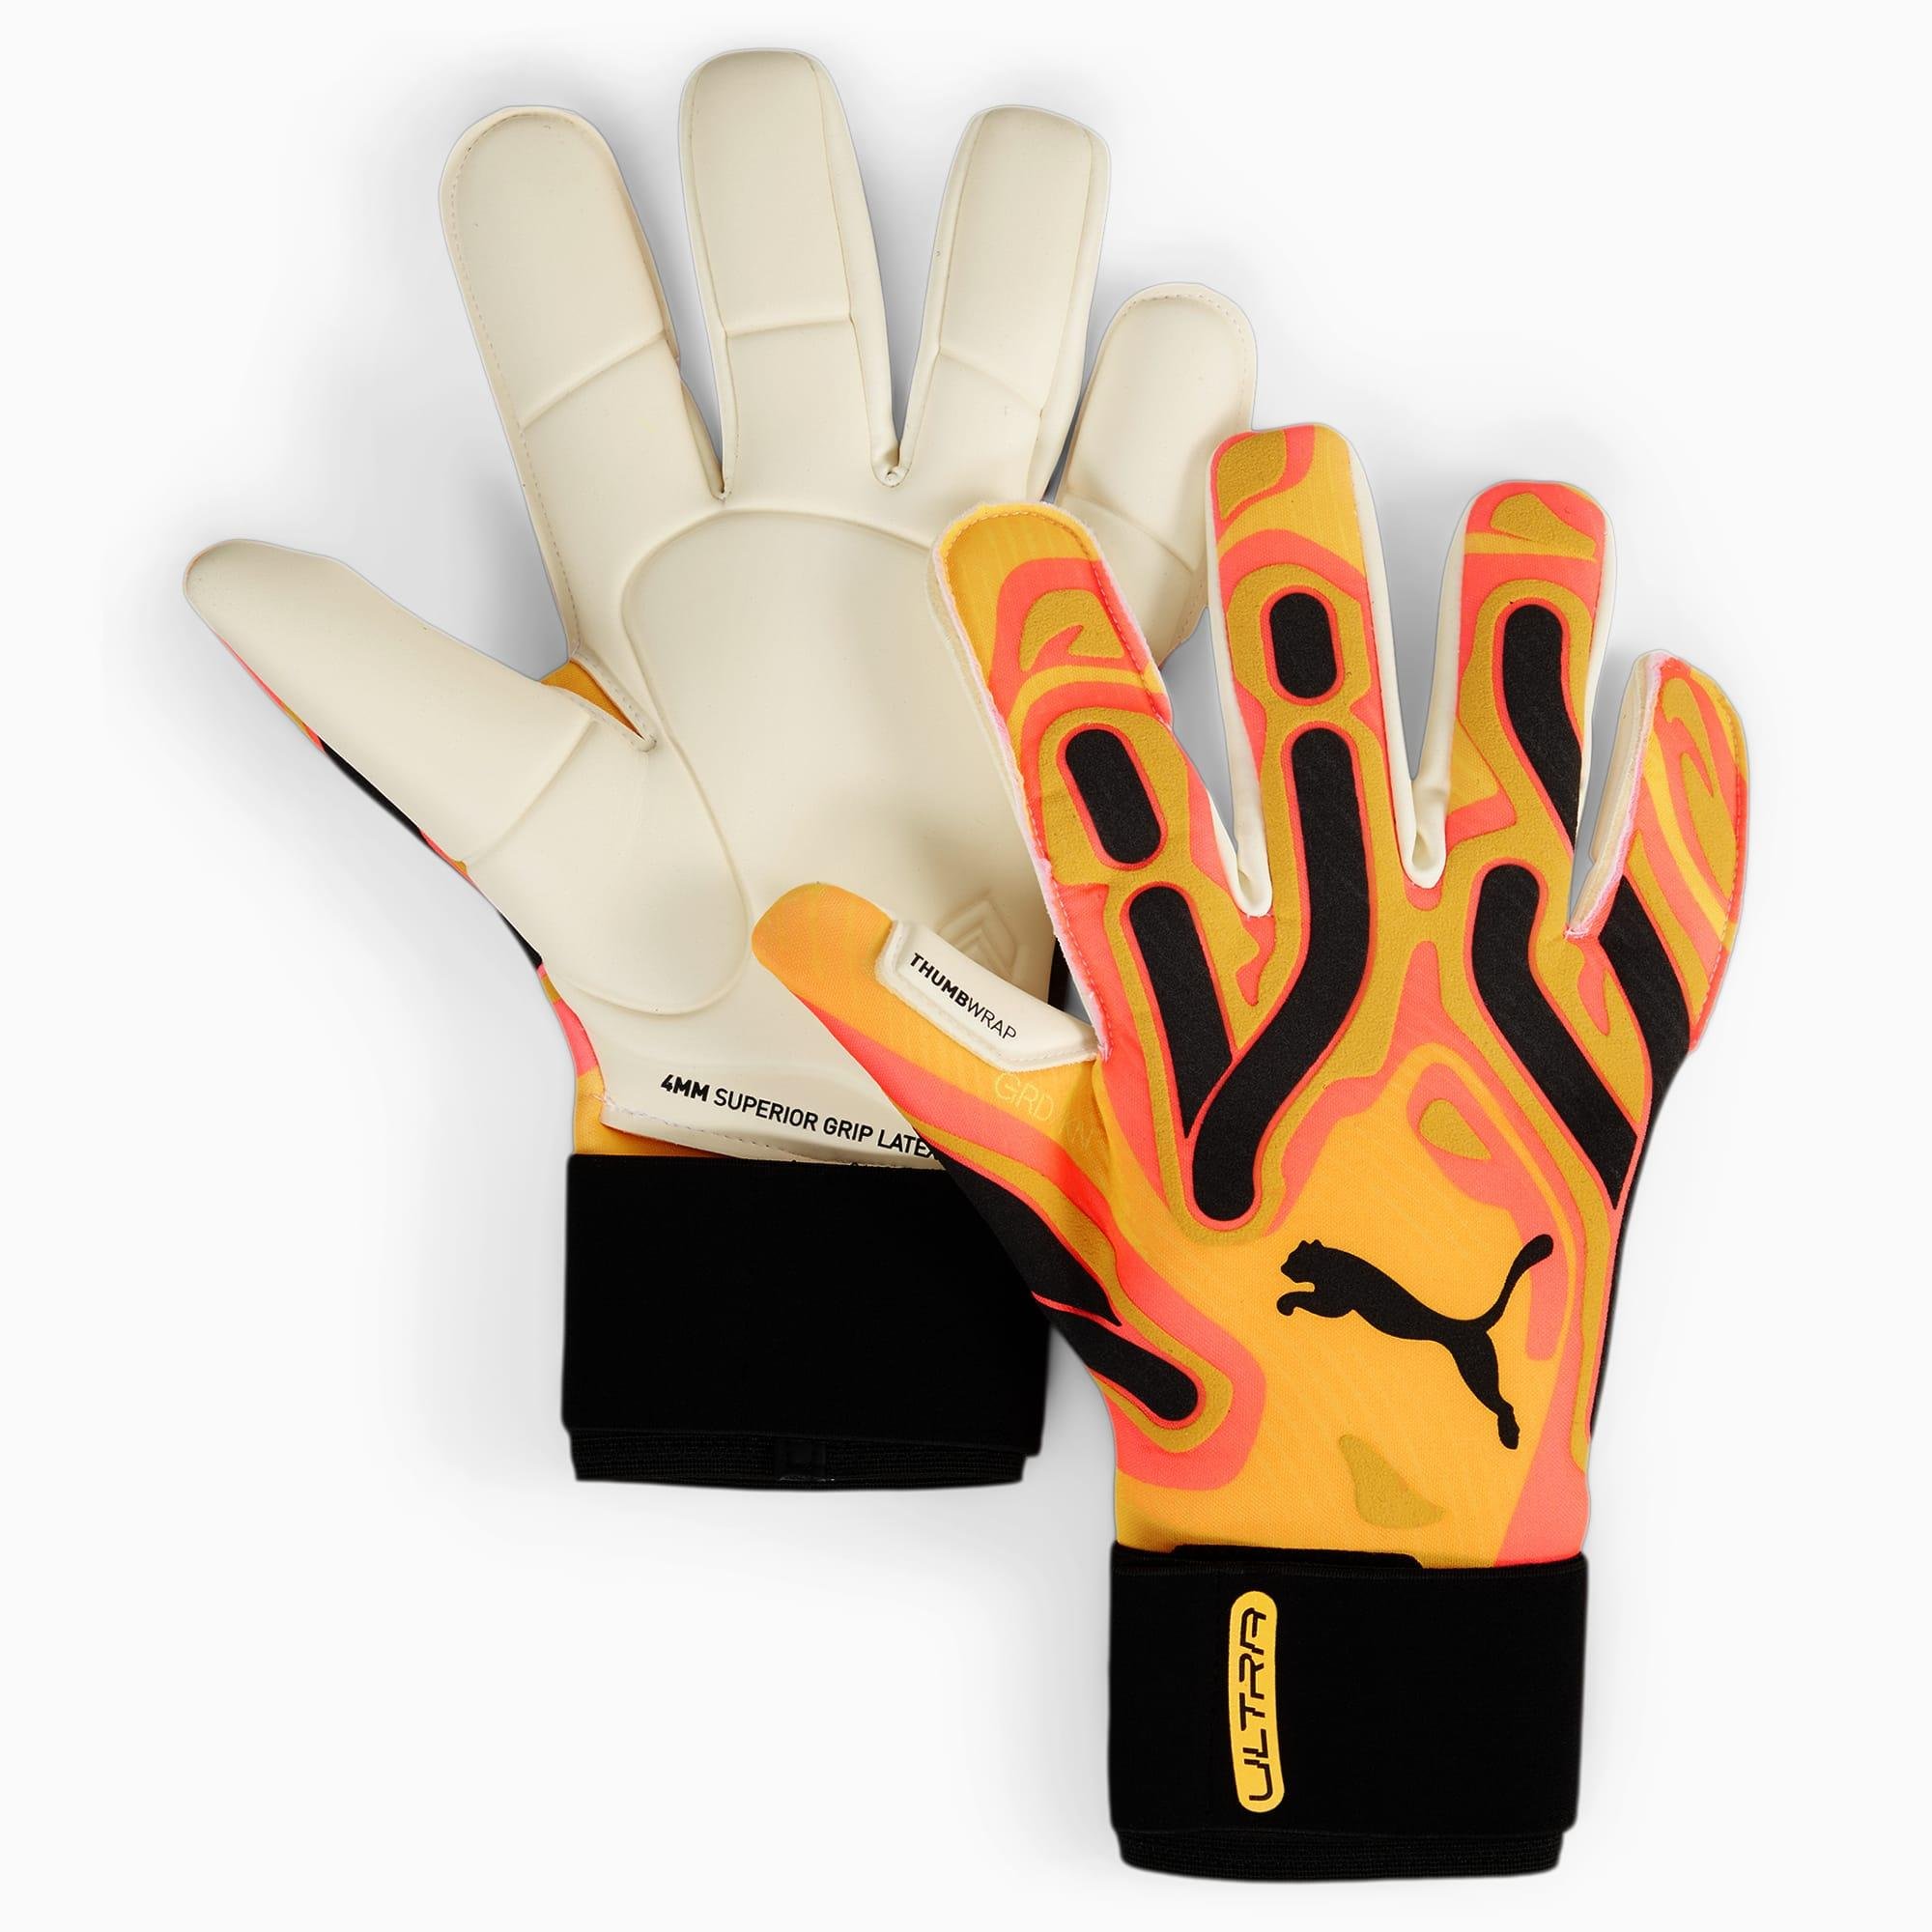 ULTRA Ultimate Hybrid Men's Goalkeeper Gloves by PUMA